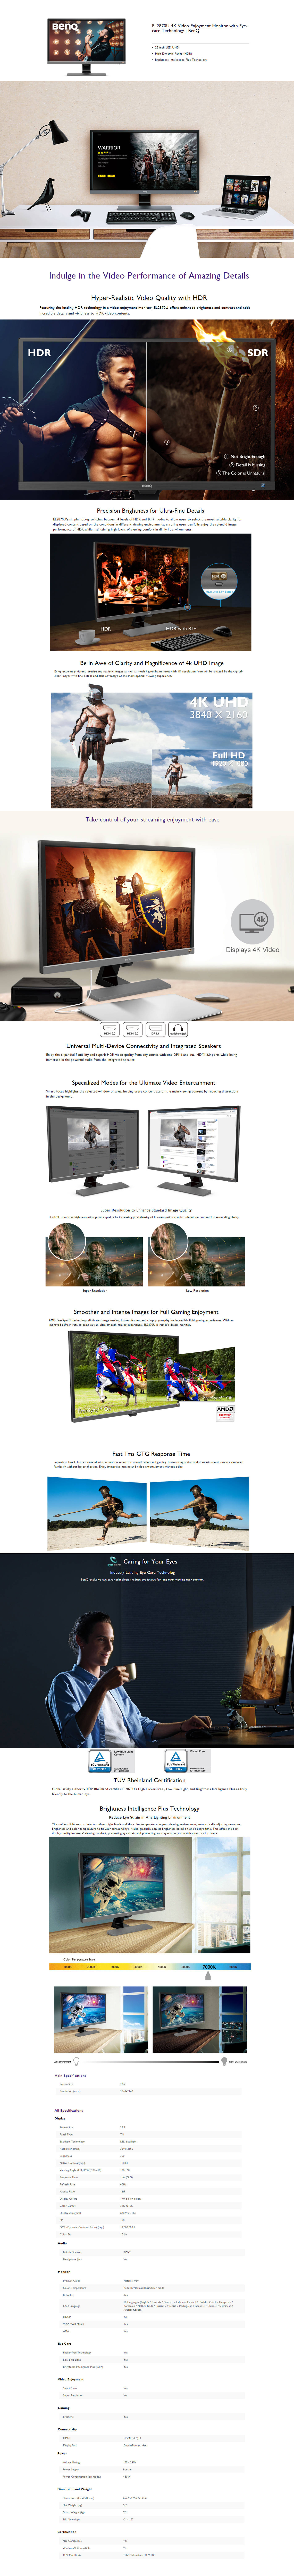  Buy Online Benq 28inch 4K Video Enjoyment Monitor with Eye-Care Technology (EL2870U)